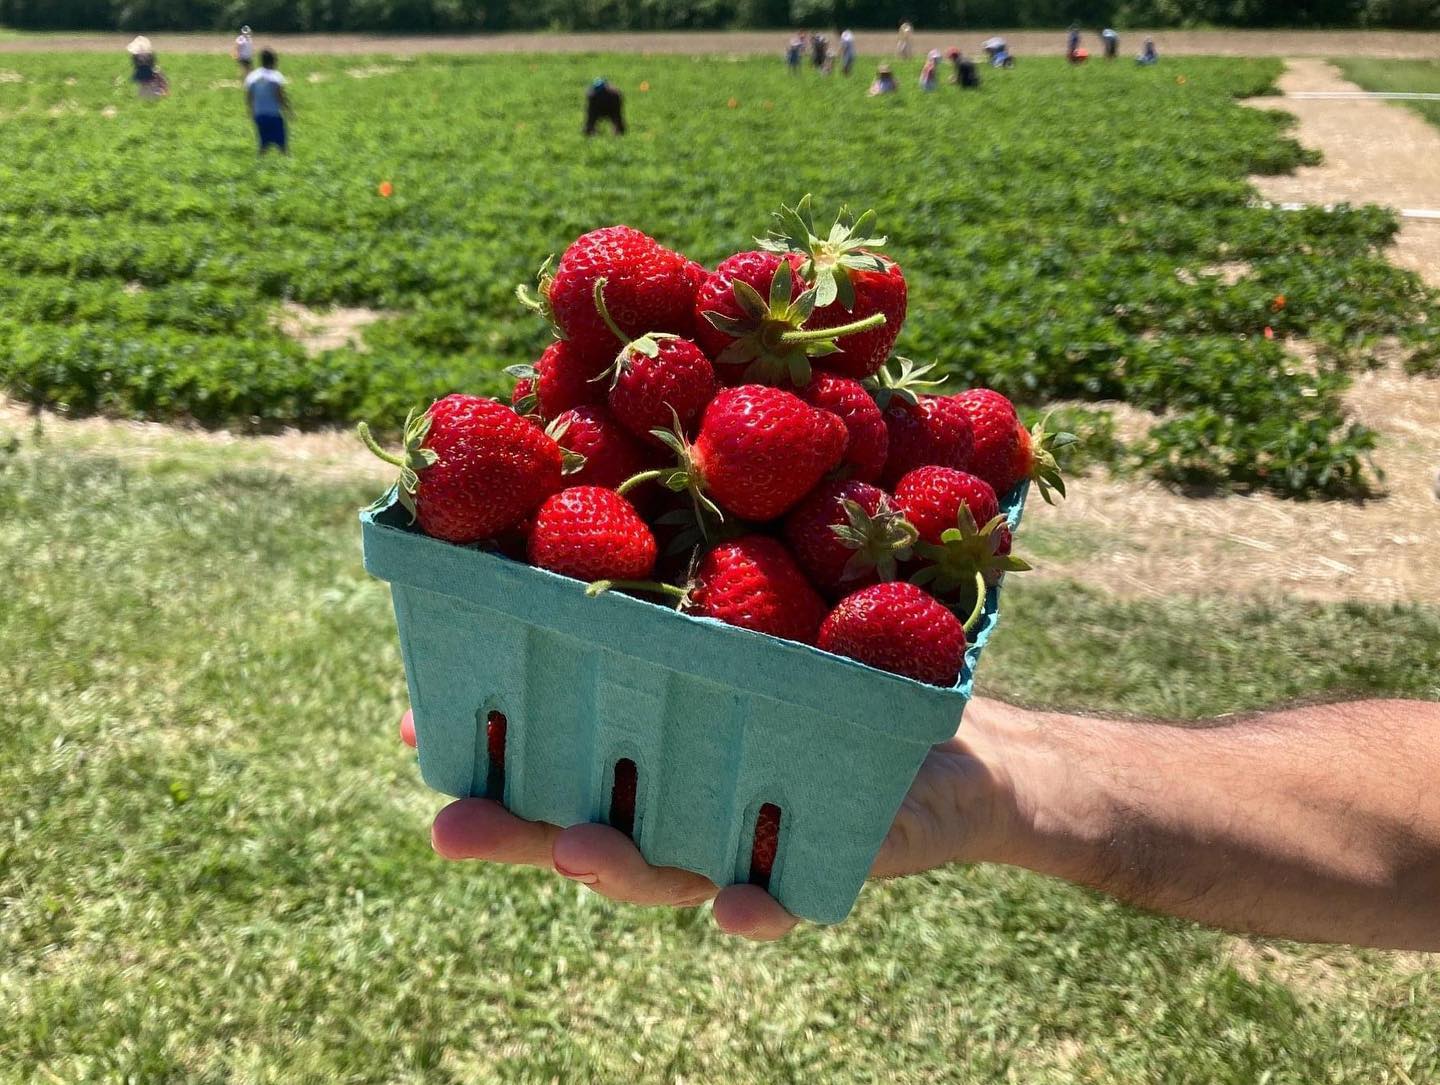 Where to go strawberry picking near Indianapolis